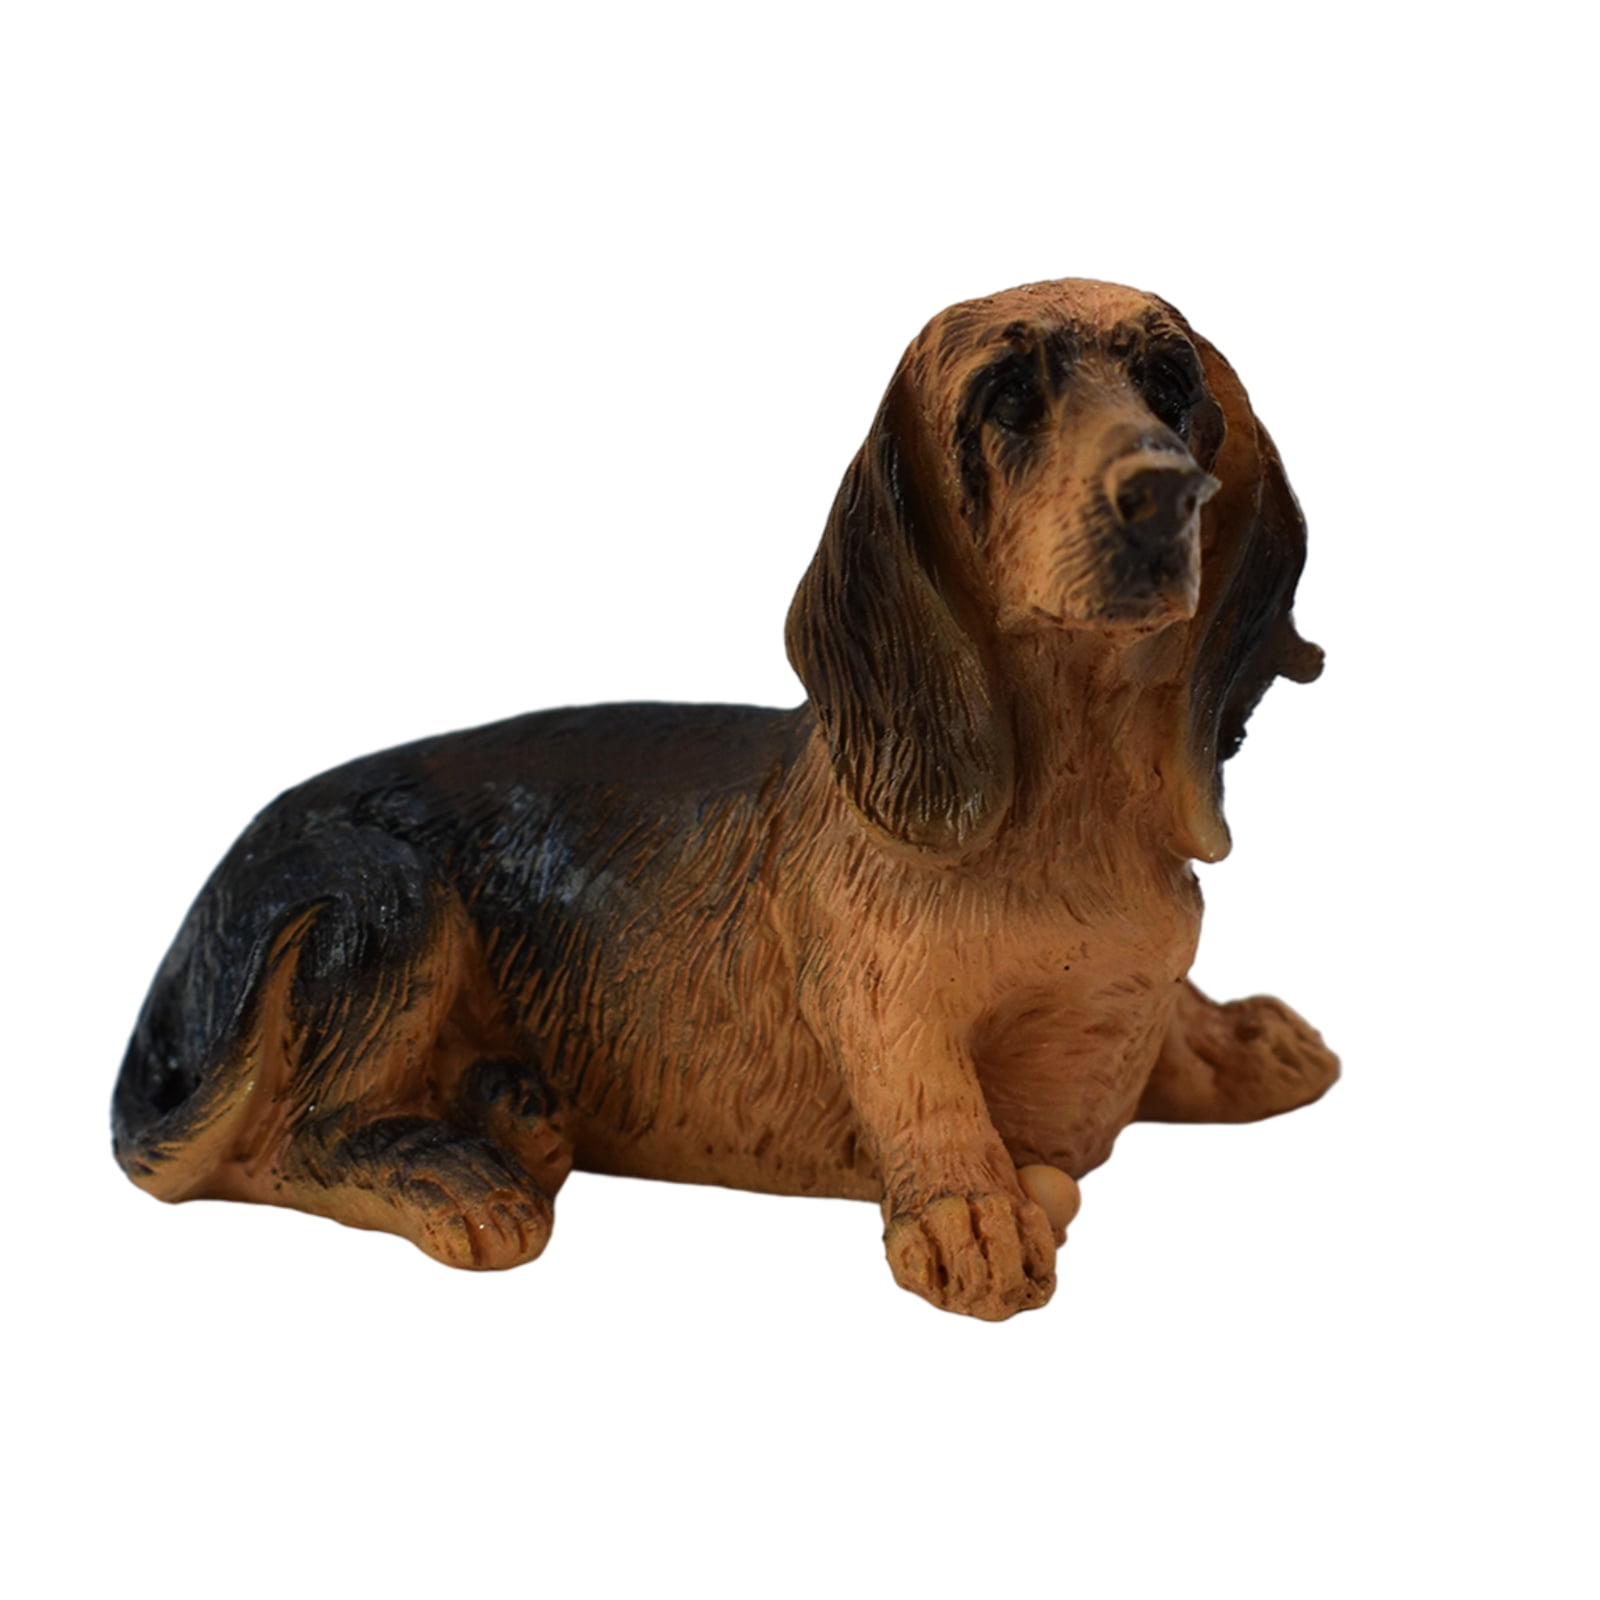 Miniature Dollhouse Brown Dachshund Dog 1:12 Scale New 